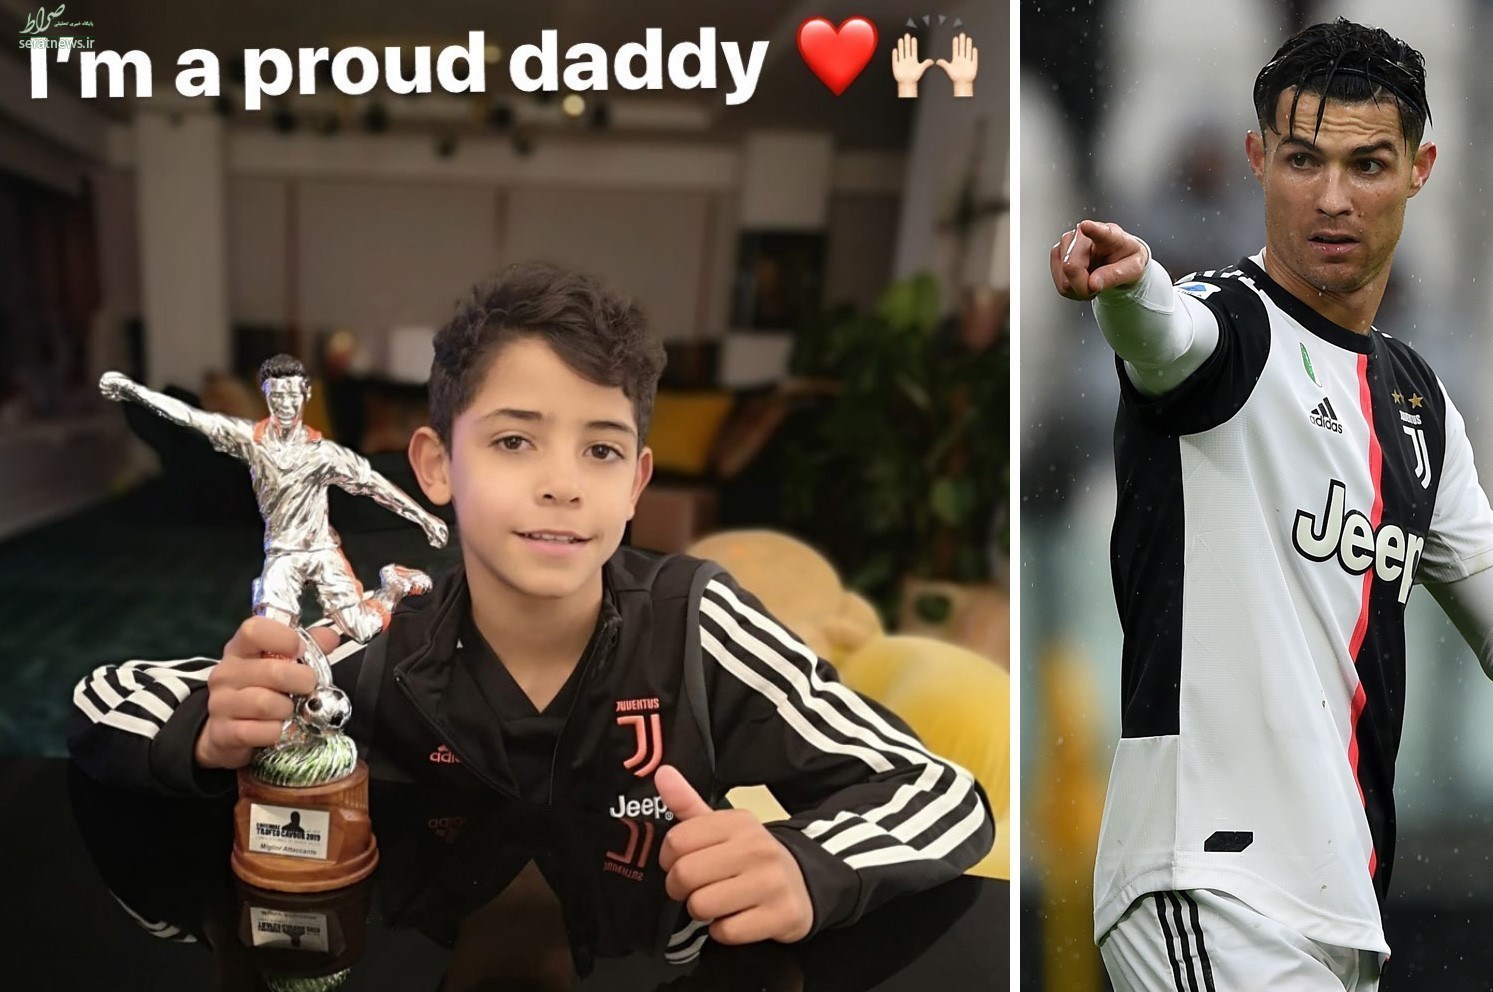 واکنش رونالدو به اولین جایزه پسرش در فوتبال + عکس